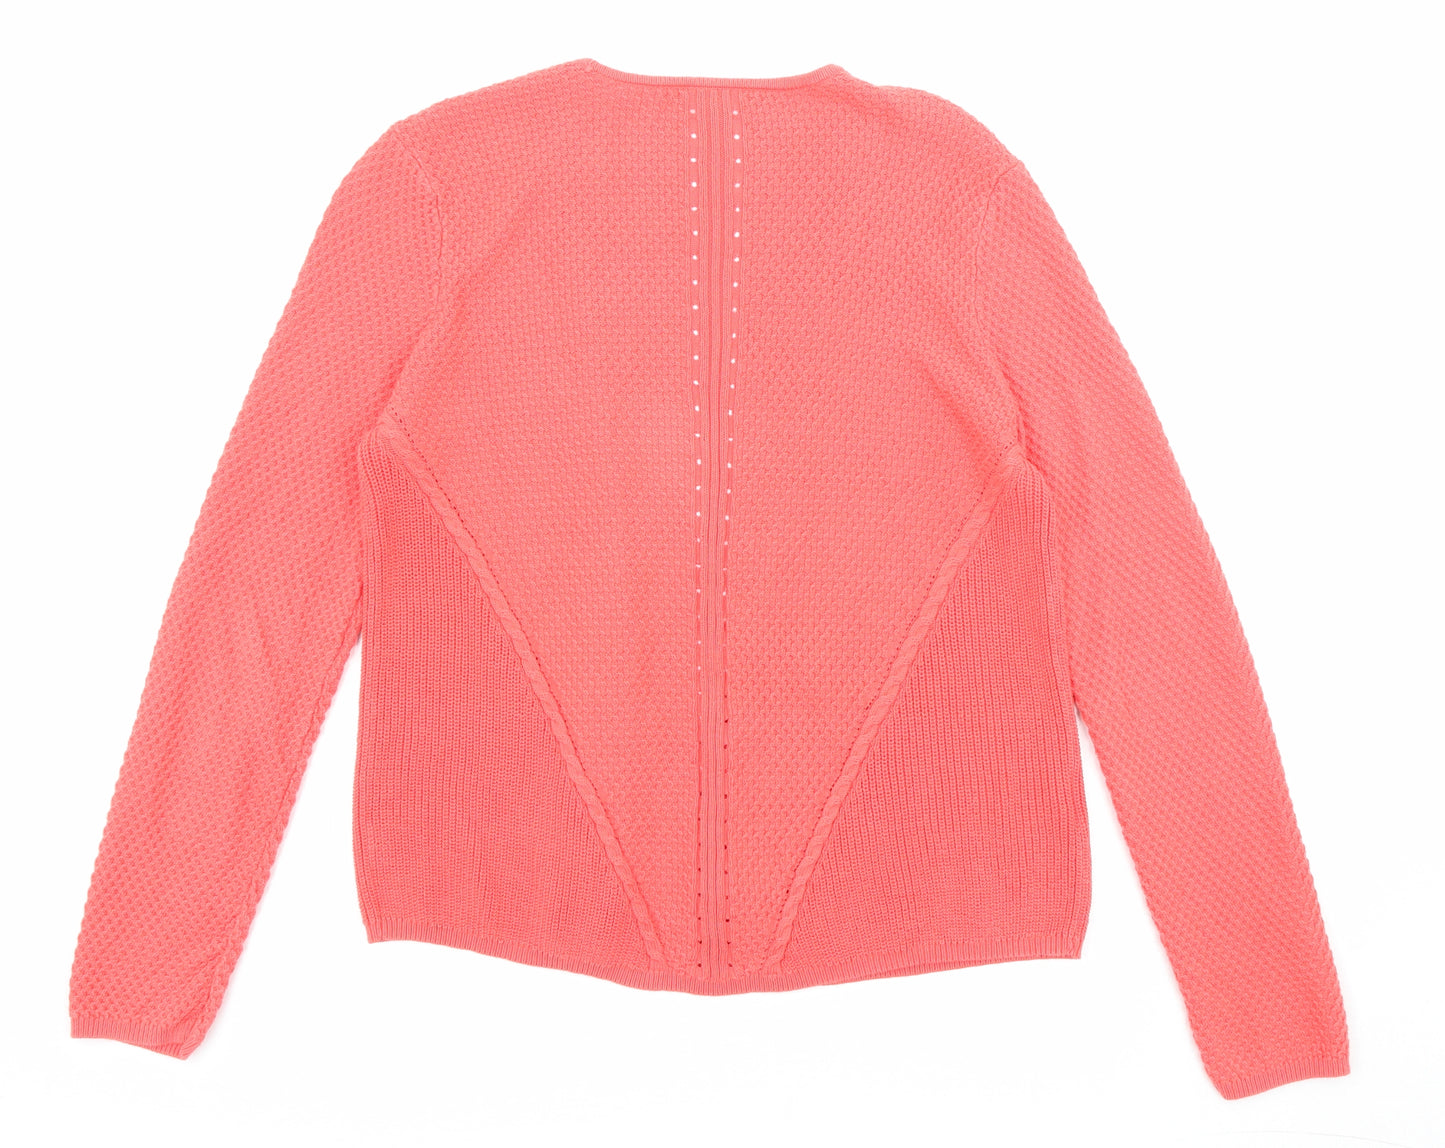 Laura Ashley Womens Pink V-Neck Cotton Cardigan Jumper Size 10